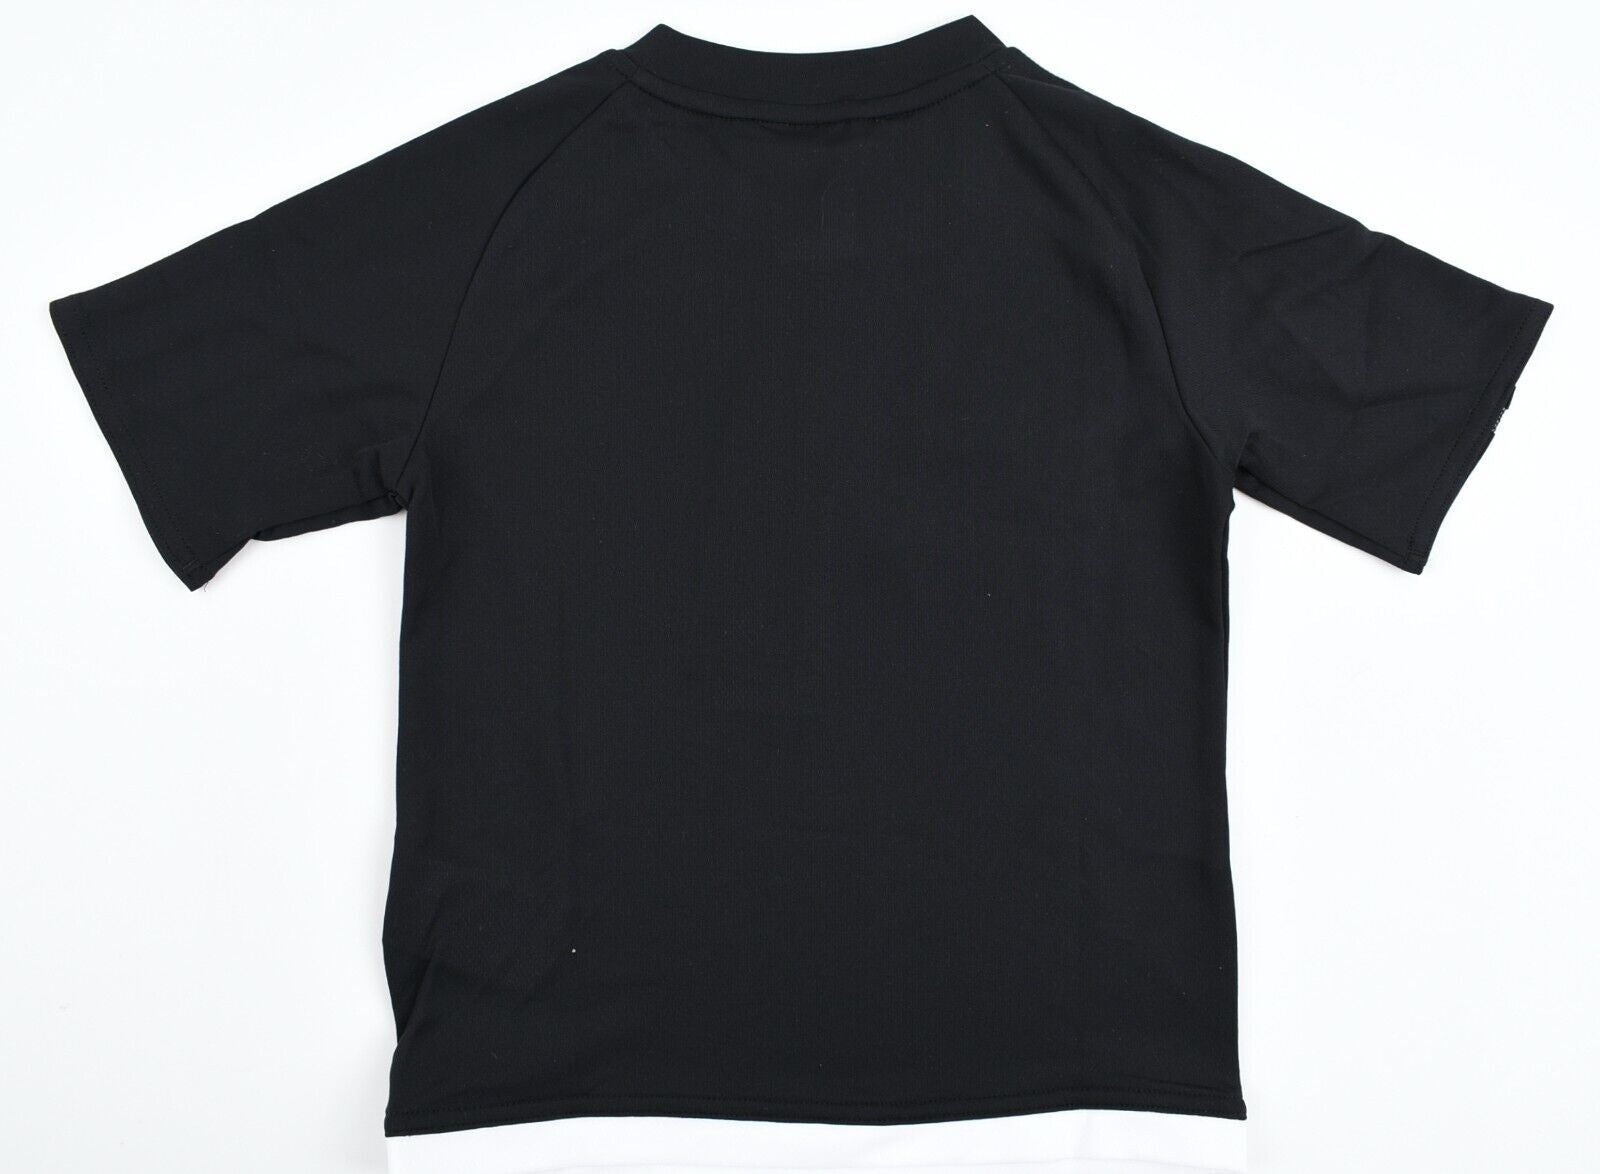 ADIDAS Boys' Kids' ESTRO TEE Activewear T-shirt, Black, size 4-5 years